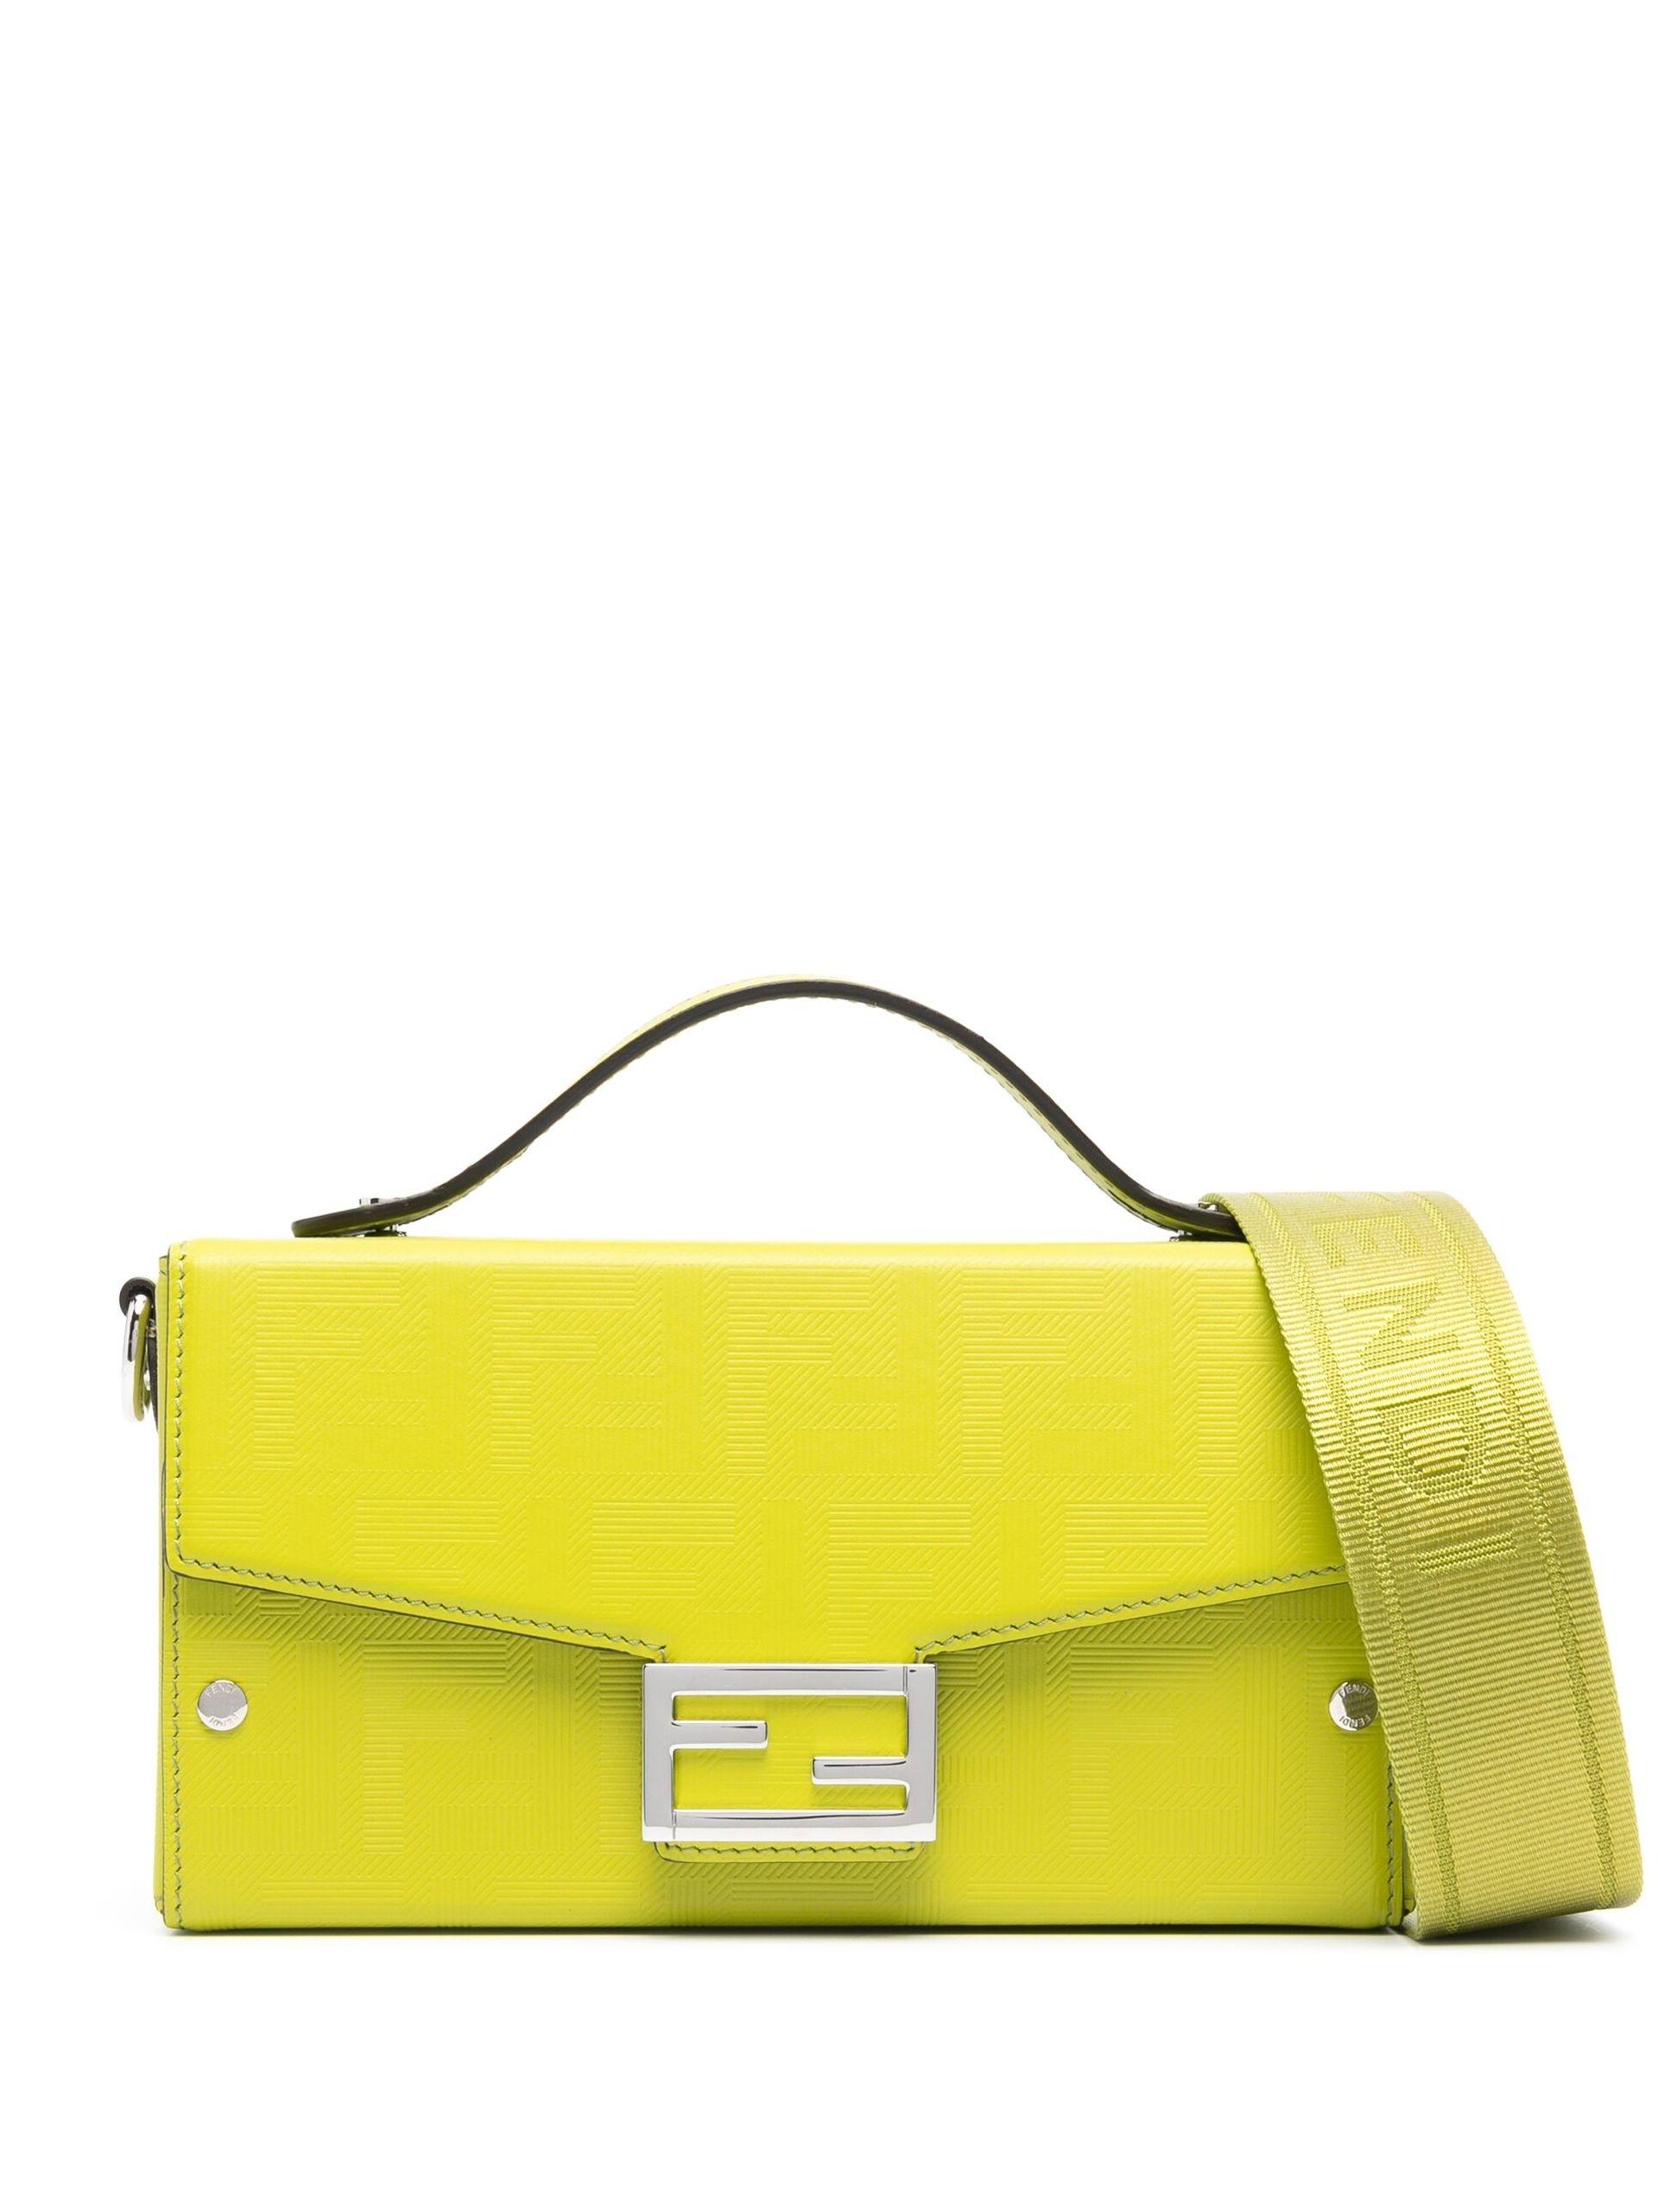 Fendi Soft Trunk Baguette Shoulder Bag in Yellow